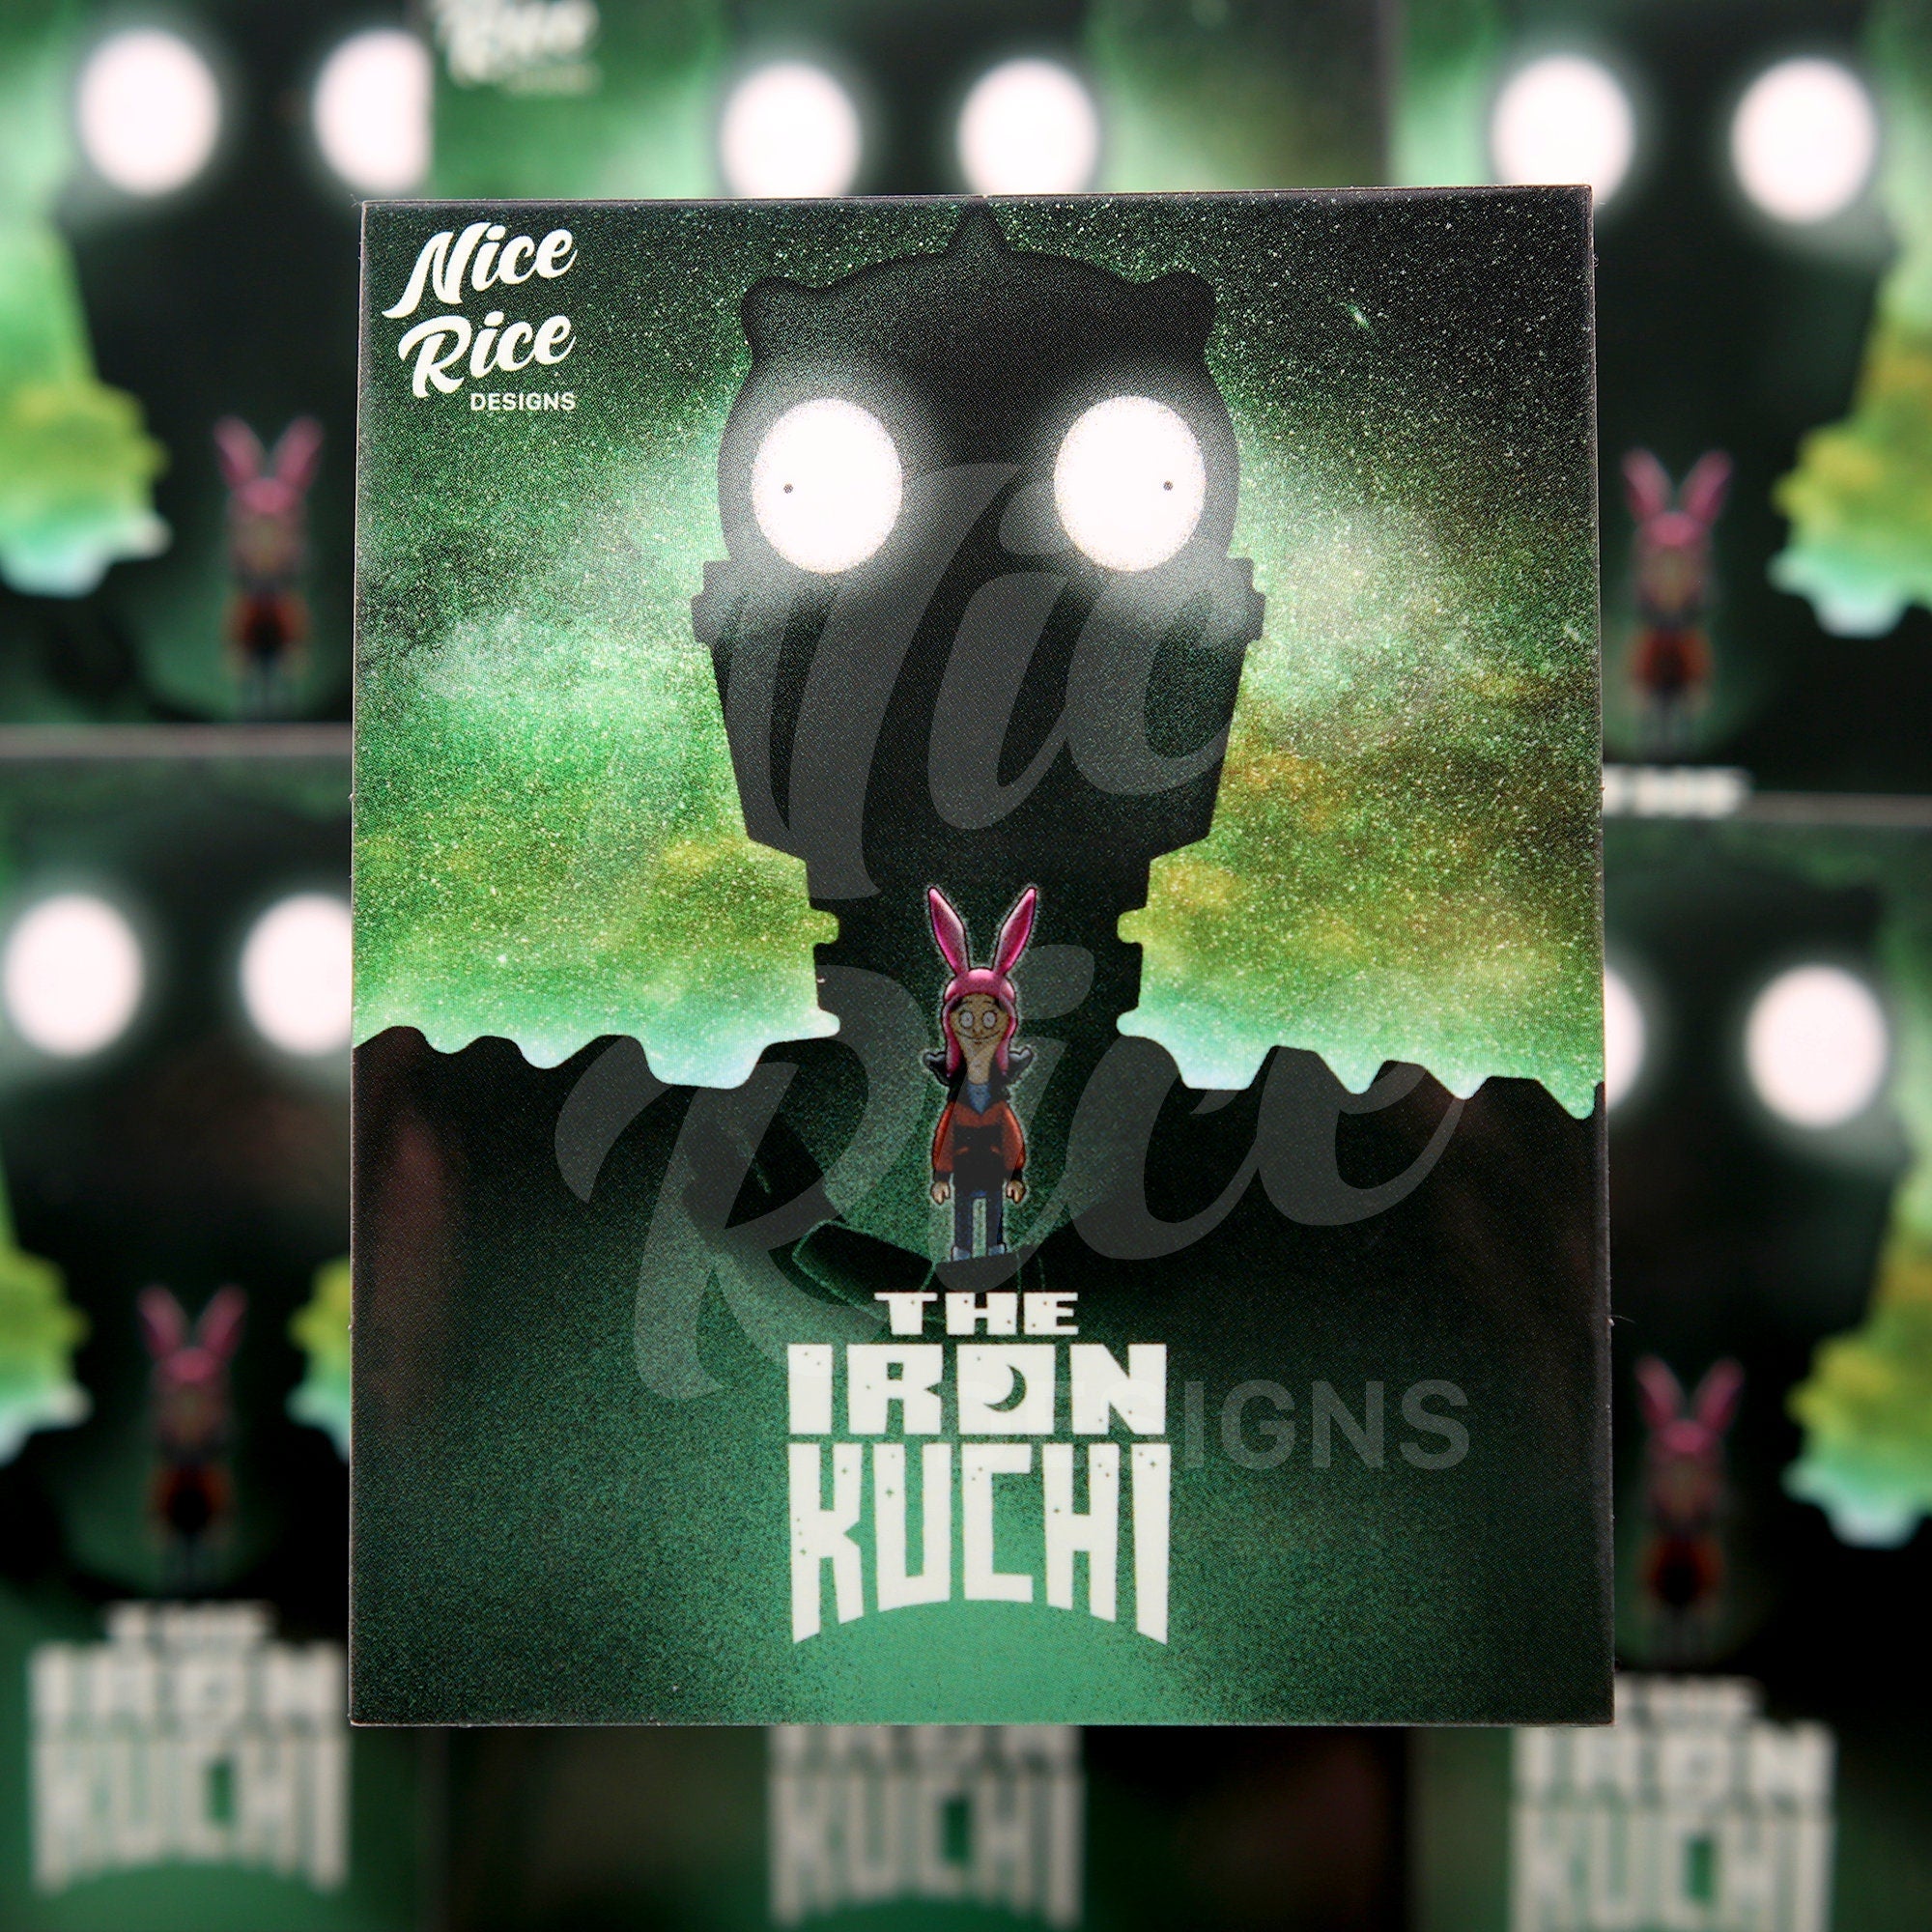 The Iron Kuchi Sticker by Nice Rice Designs